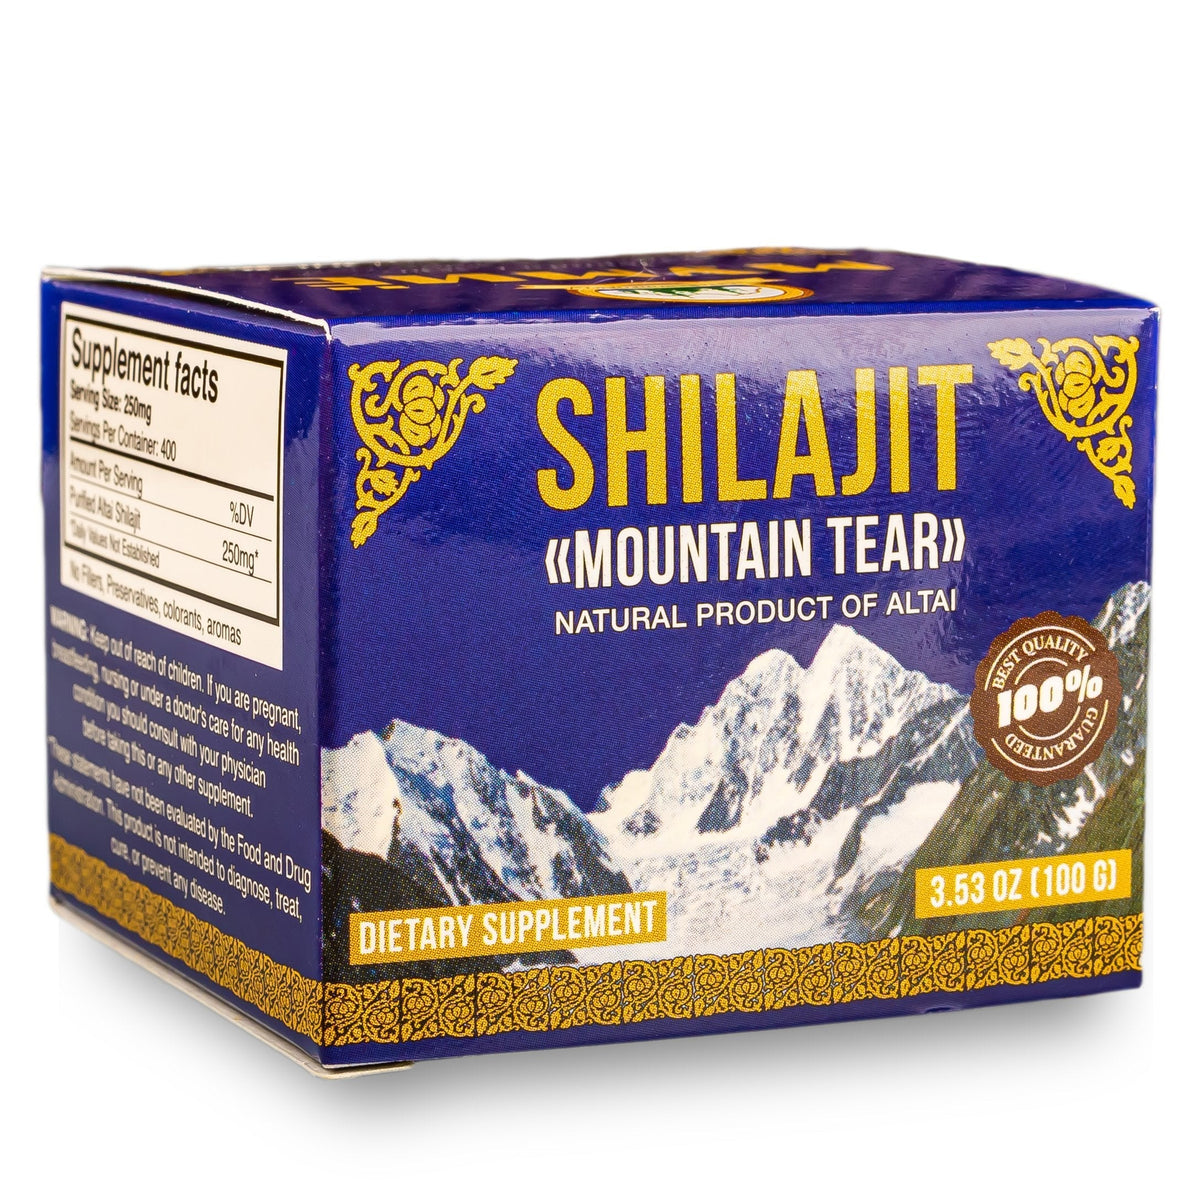 Shilajit pur « Mountain Tear » 100g Résine sibérienne bio de l’Altaï Mumijo